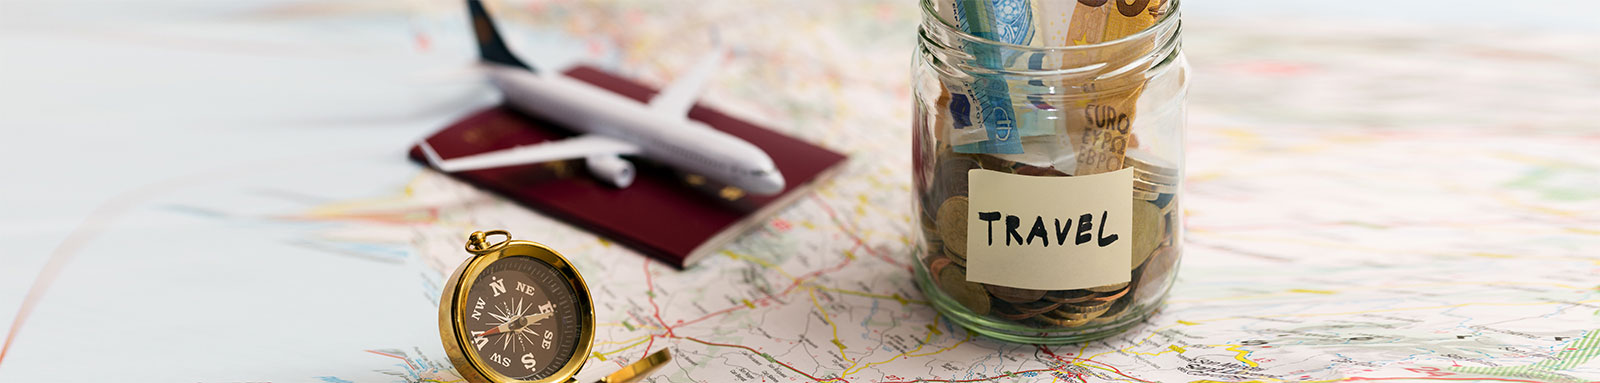 travel money plane compass map